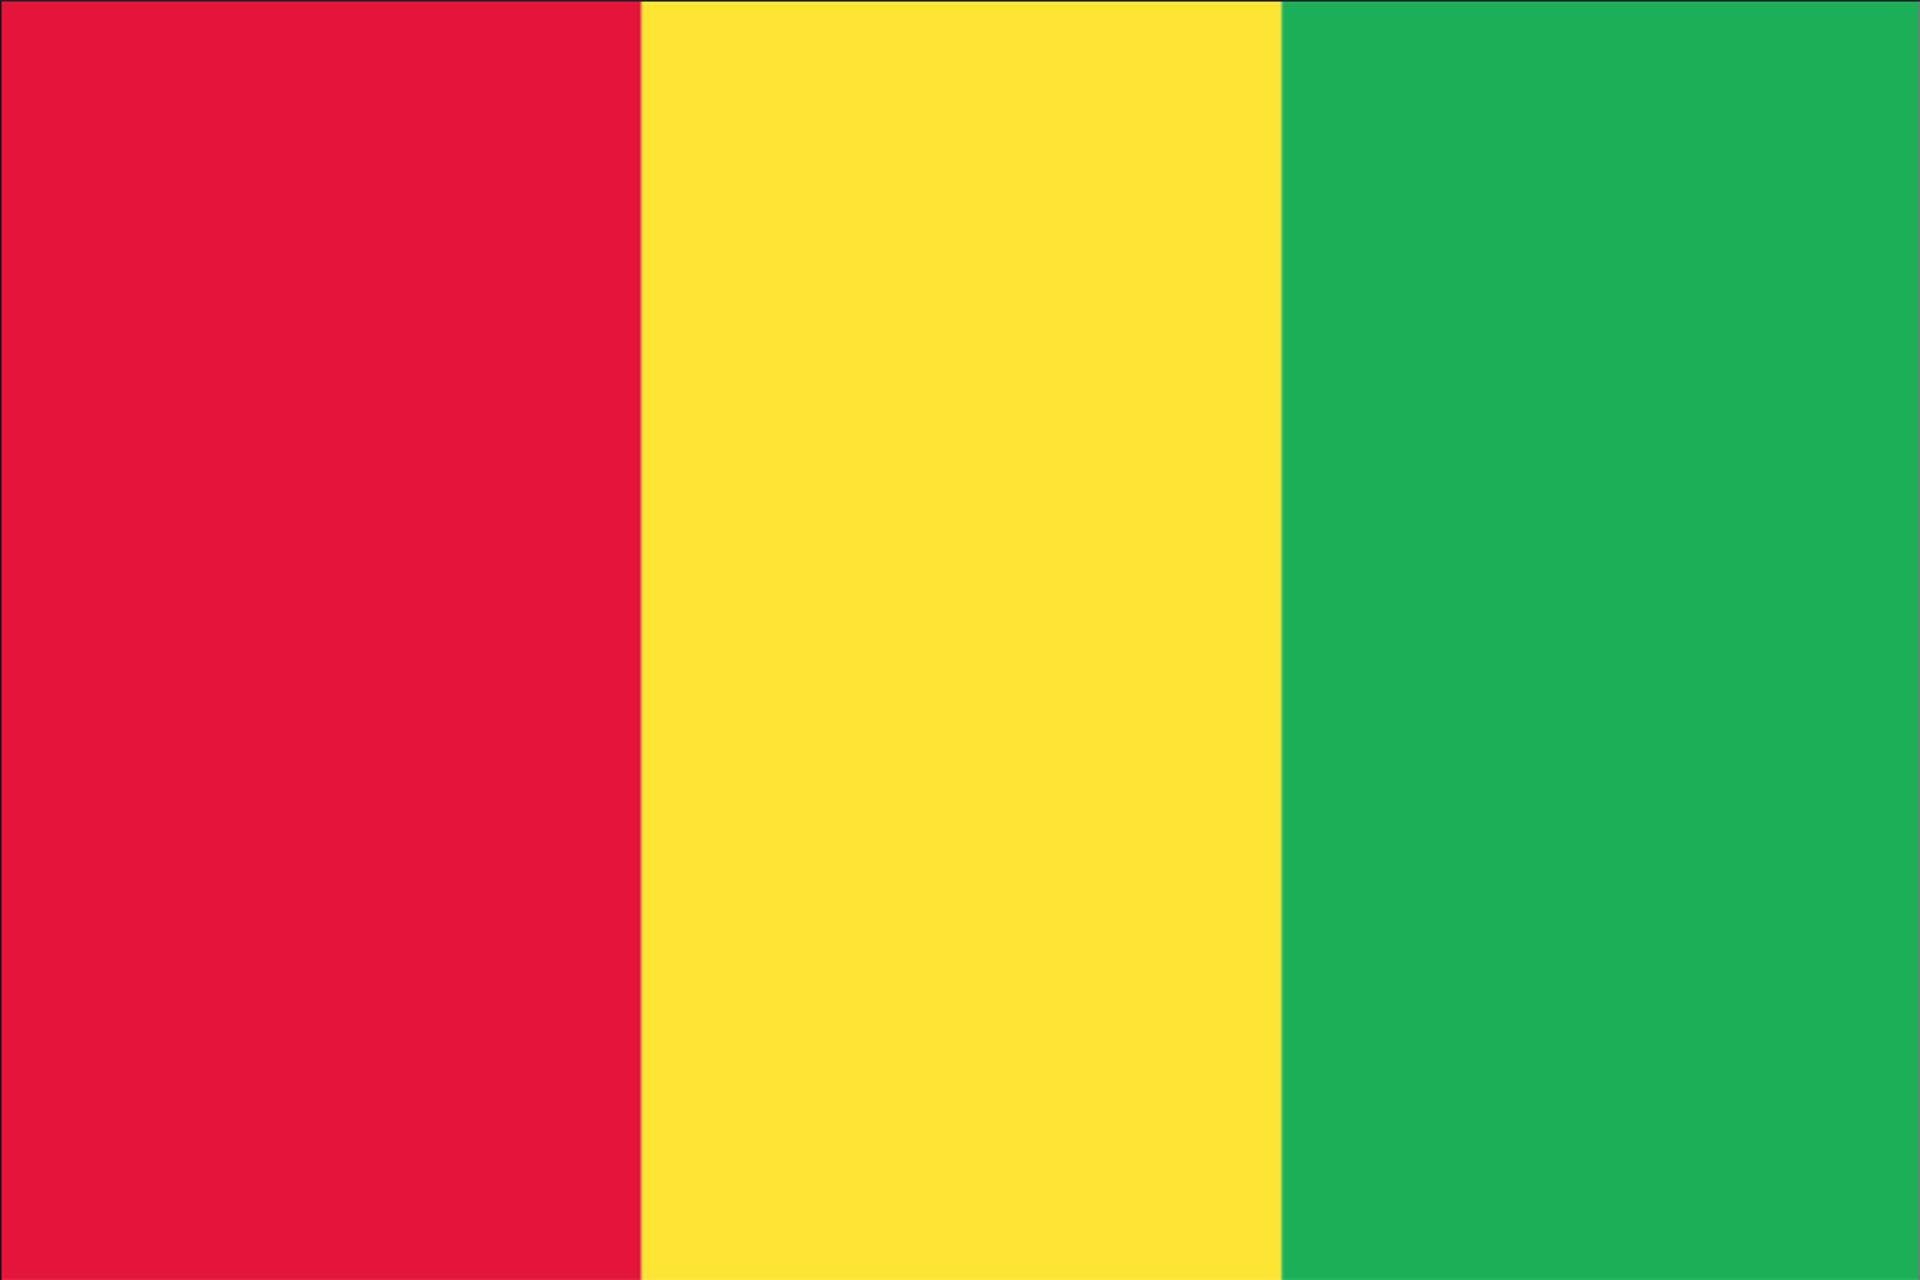 flaggenmeer g/m² 80 Flagge Guinea